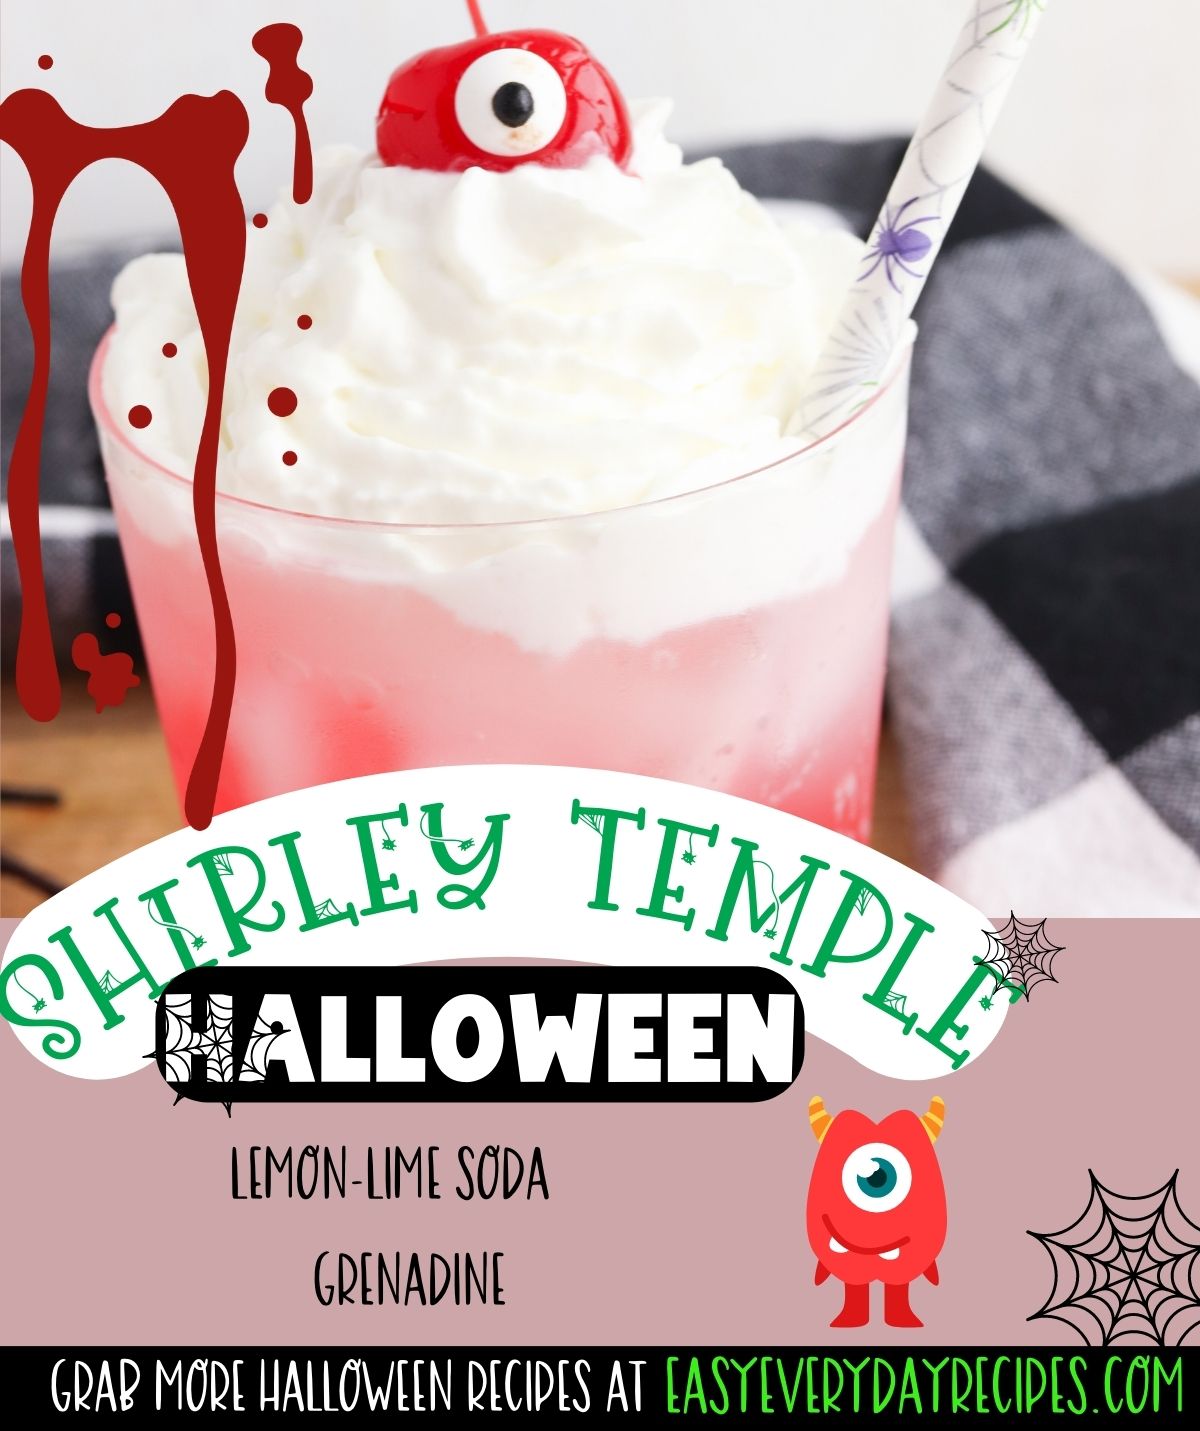 Shirley temple halloween lemonade.